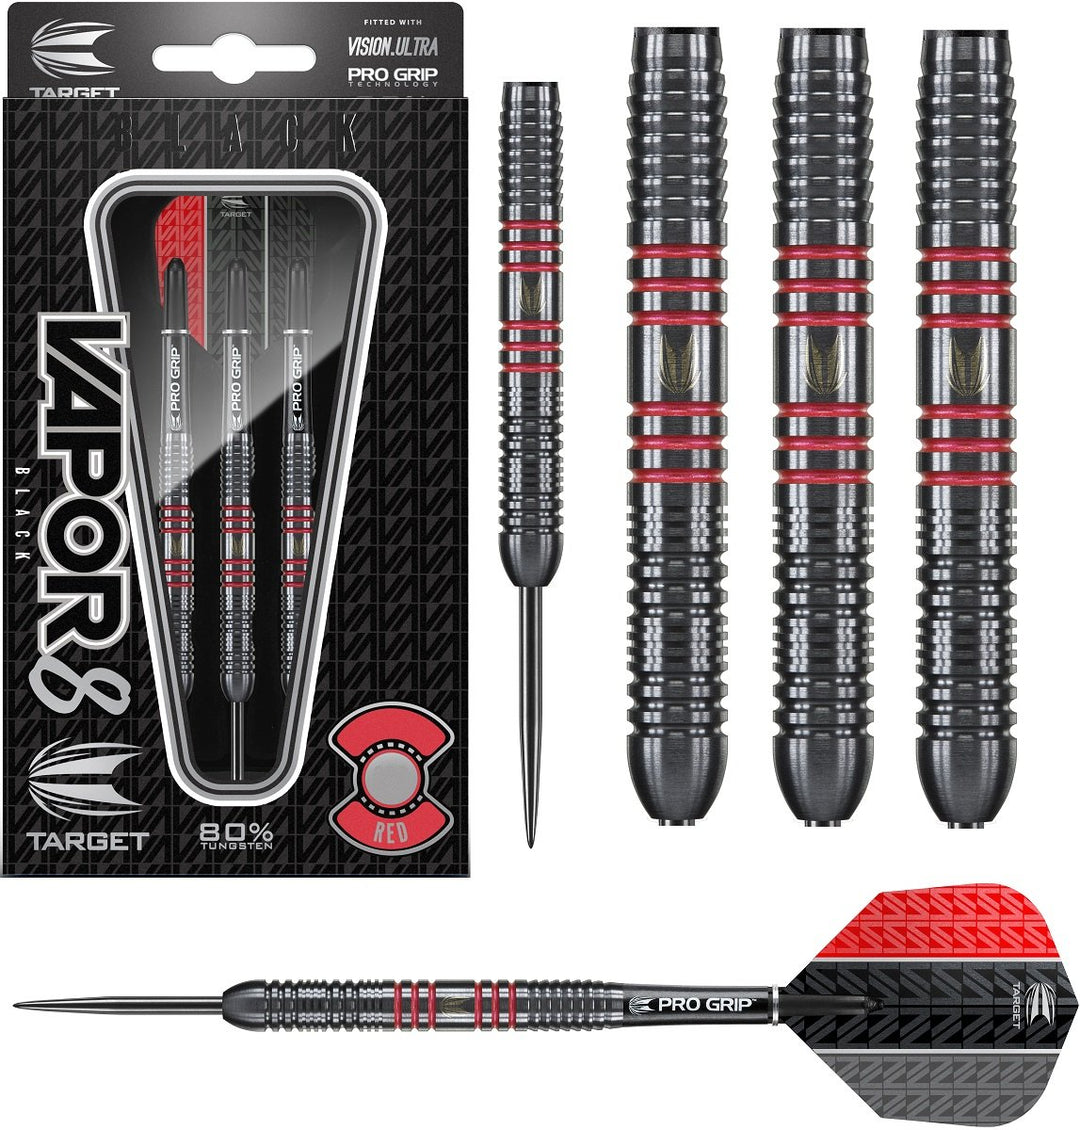 Vapor 8 Black with Red Rings Steel Tip Darts by Target - Vapor8